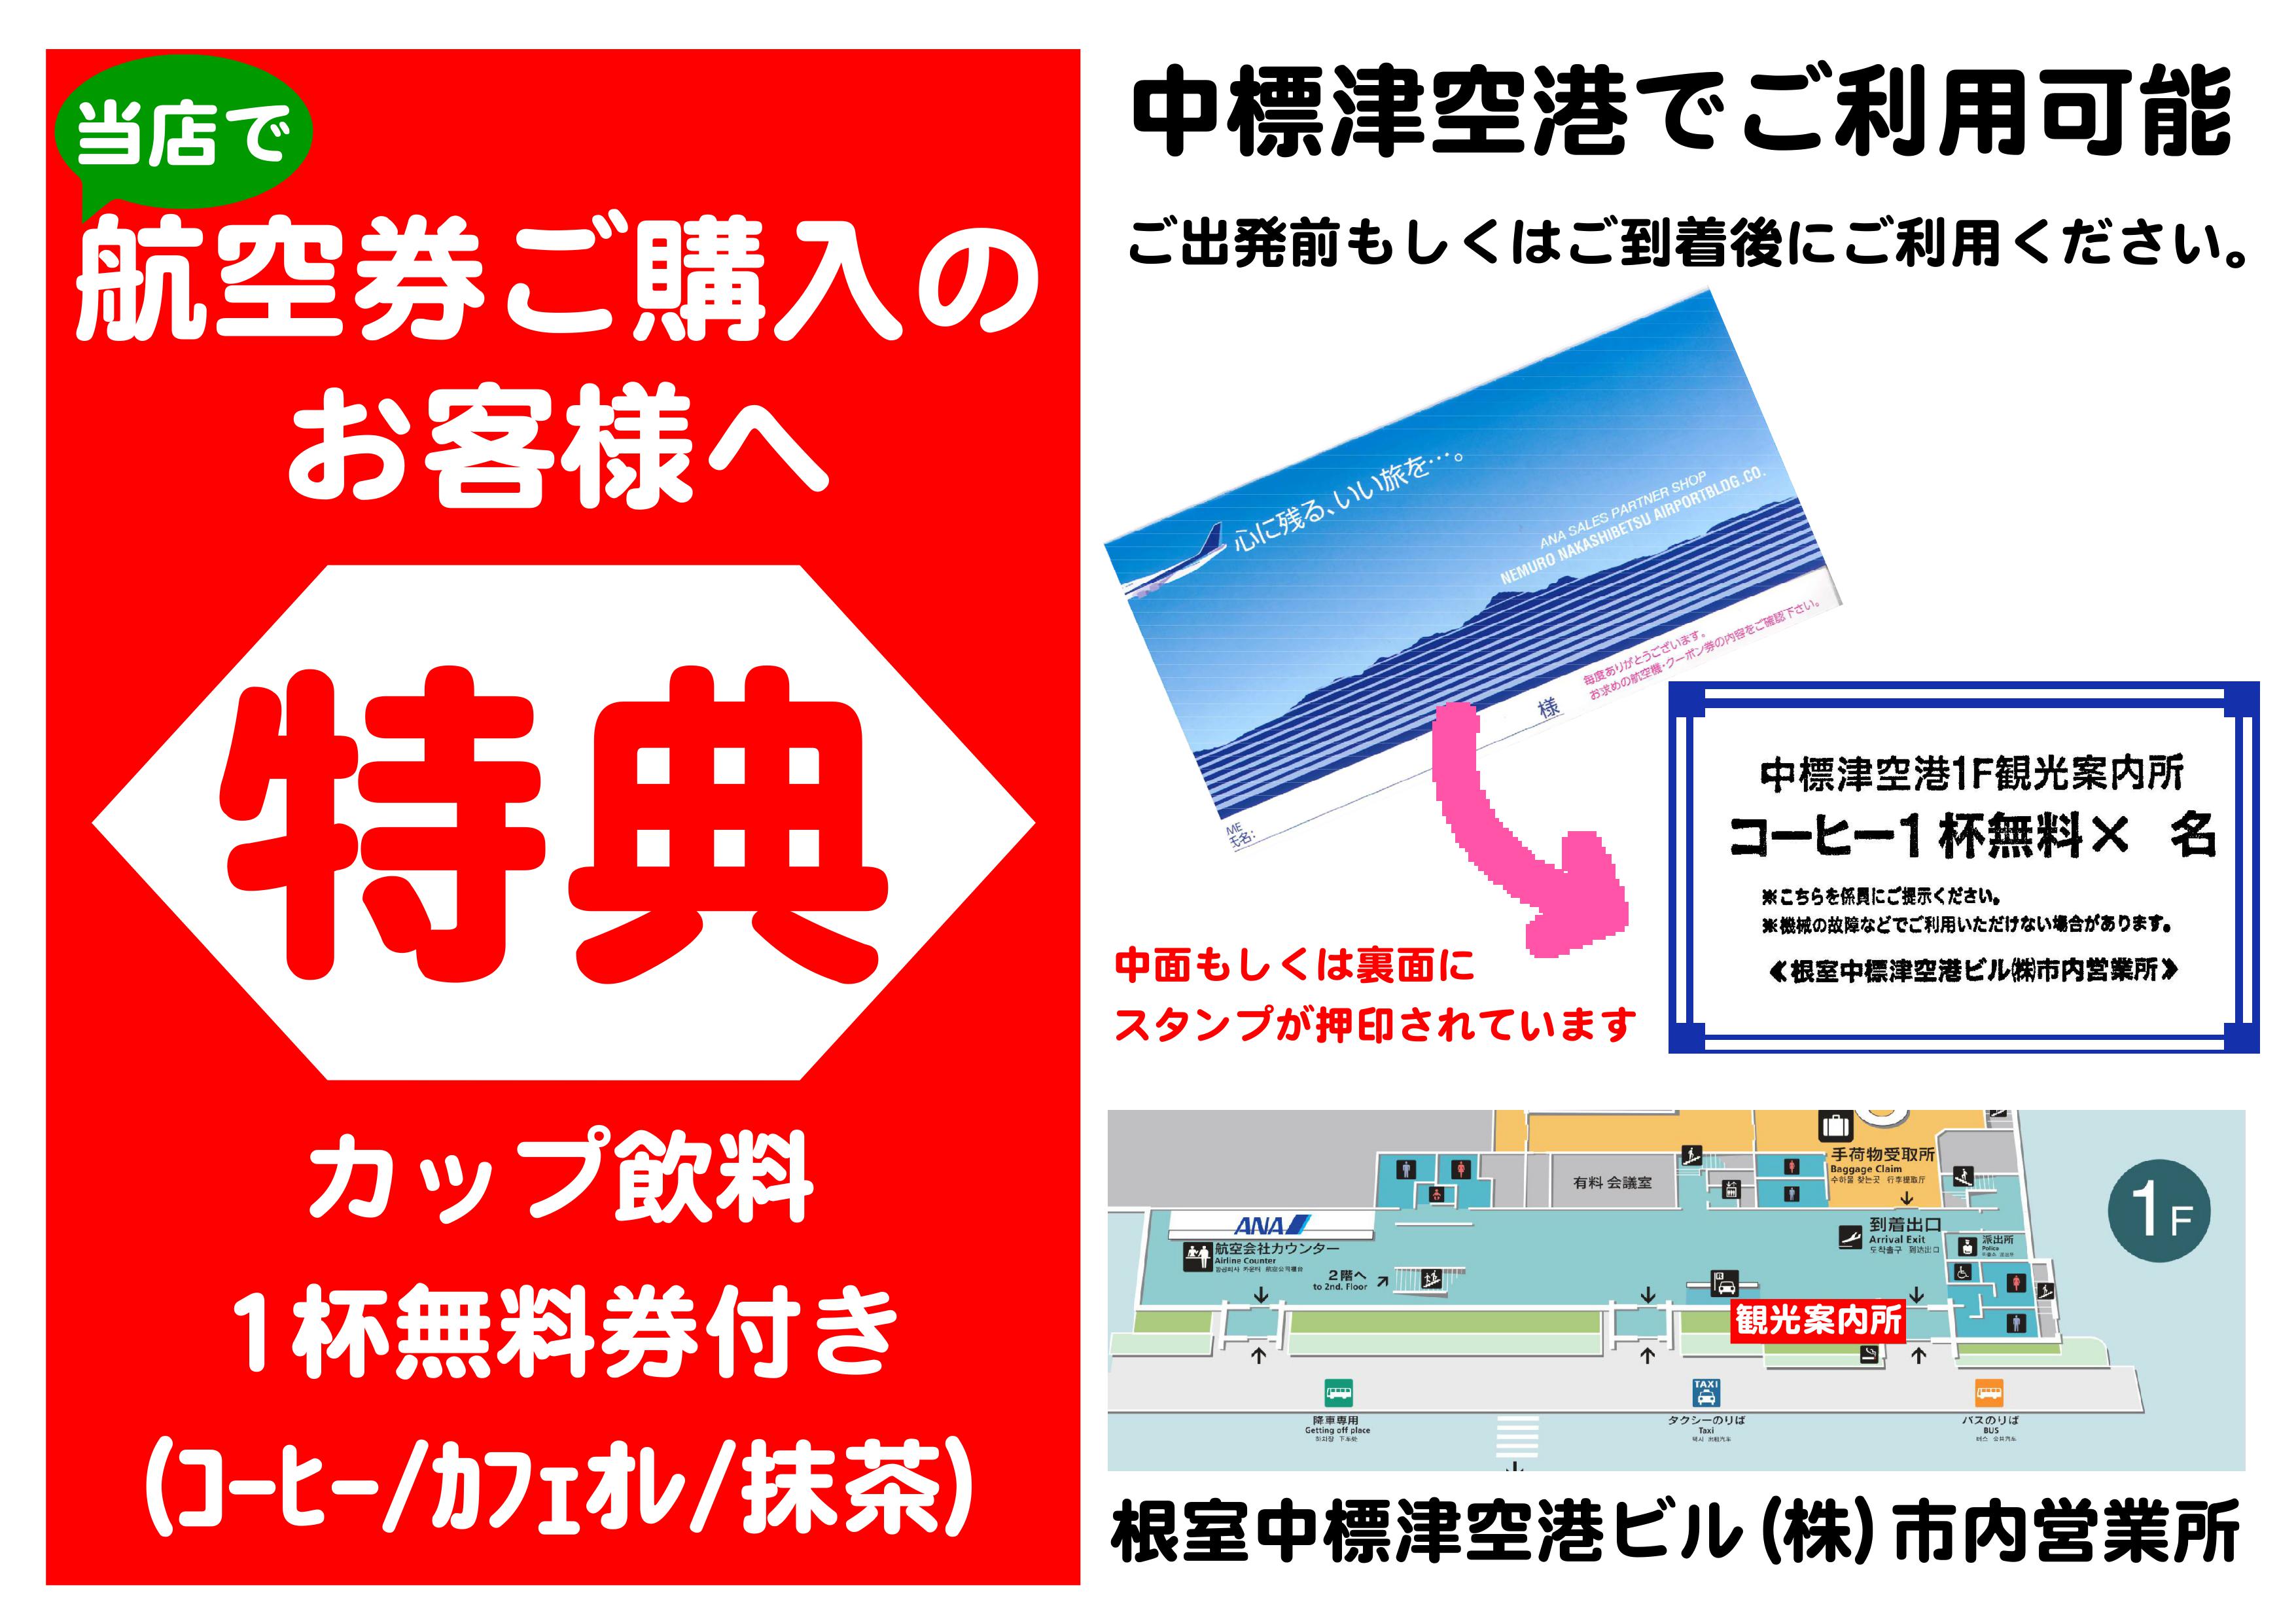 http://www.nakashibetsu-airport.jp/%E7%89%B9%E5%85%B8.jpg